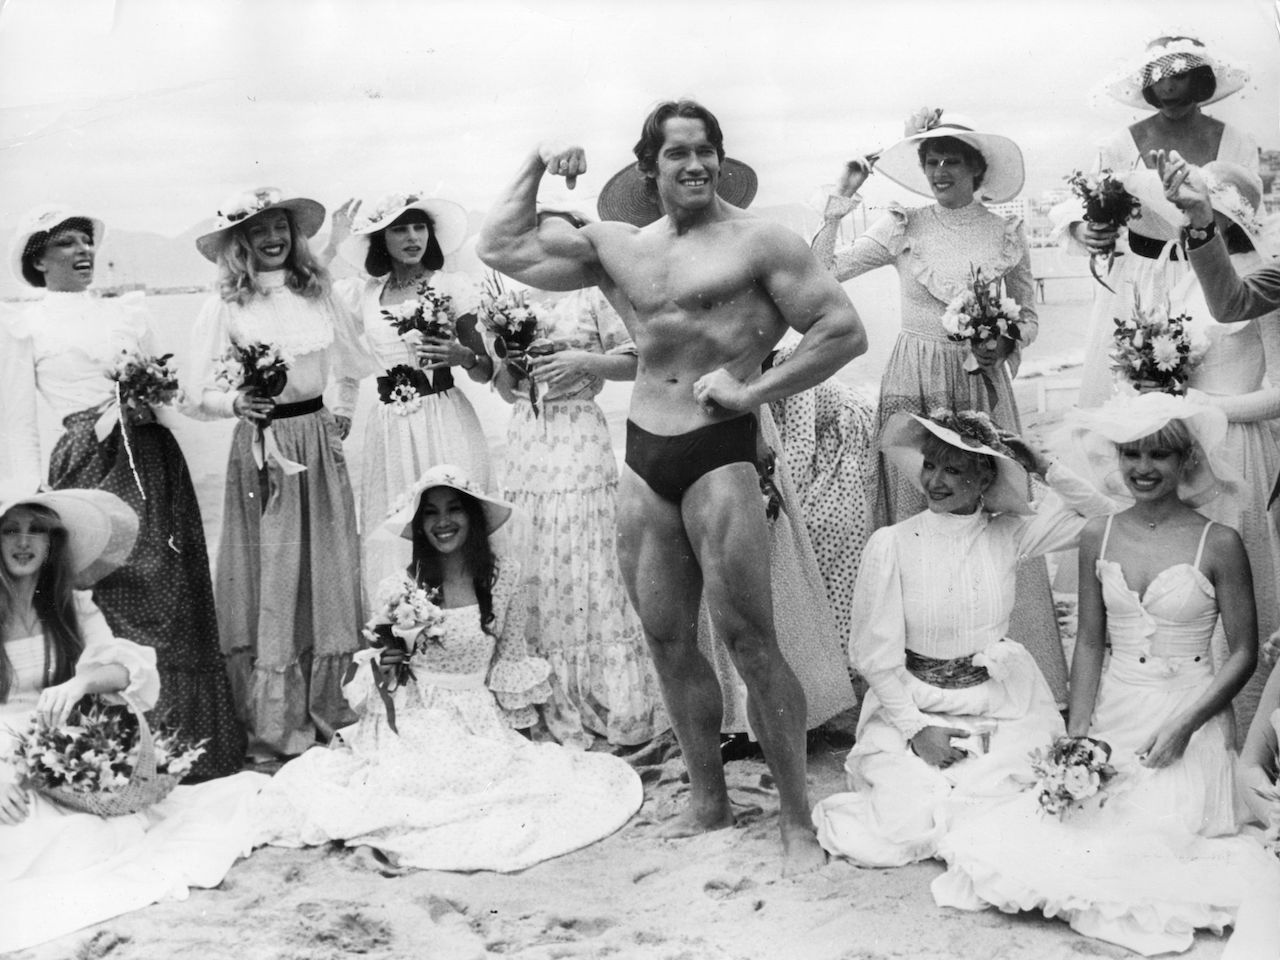 Arnold Schwarzenegger on Cannes beach during the Film Festival